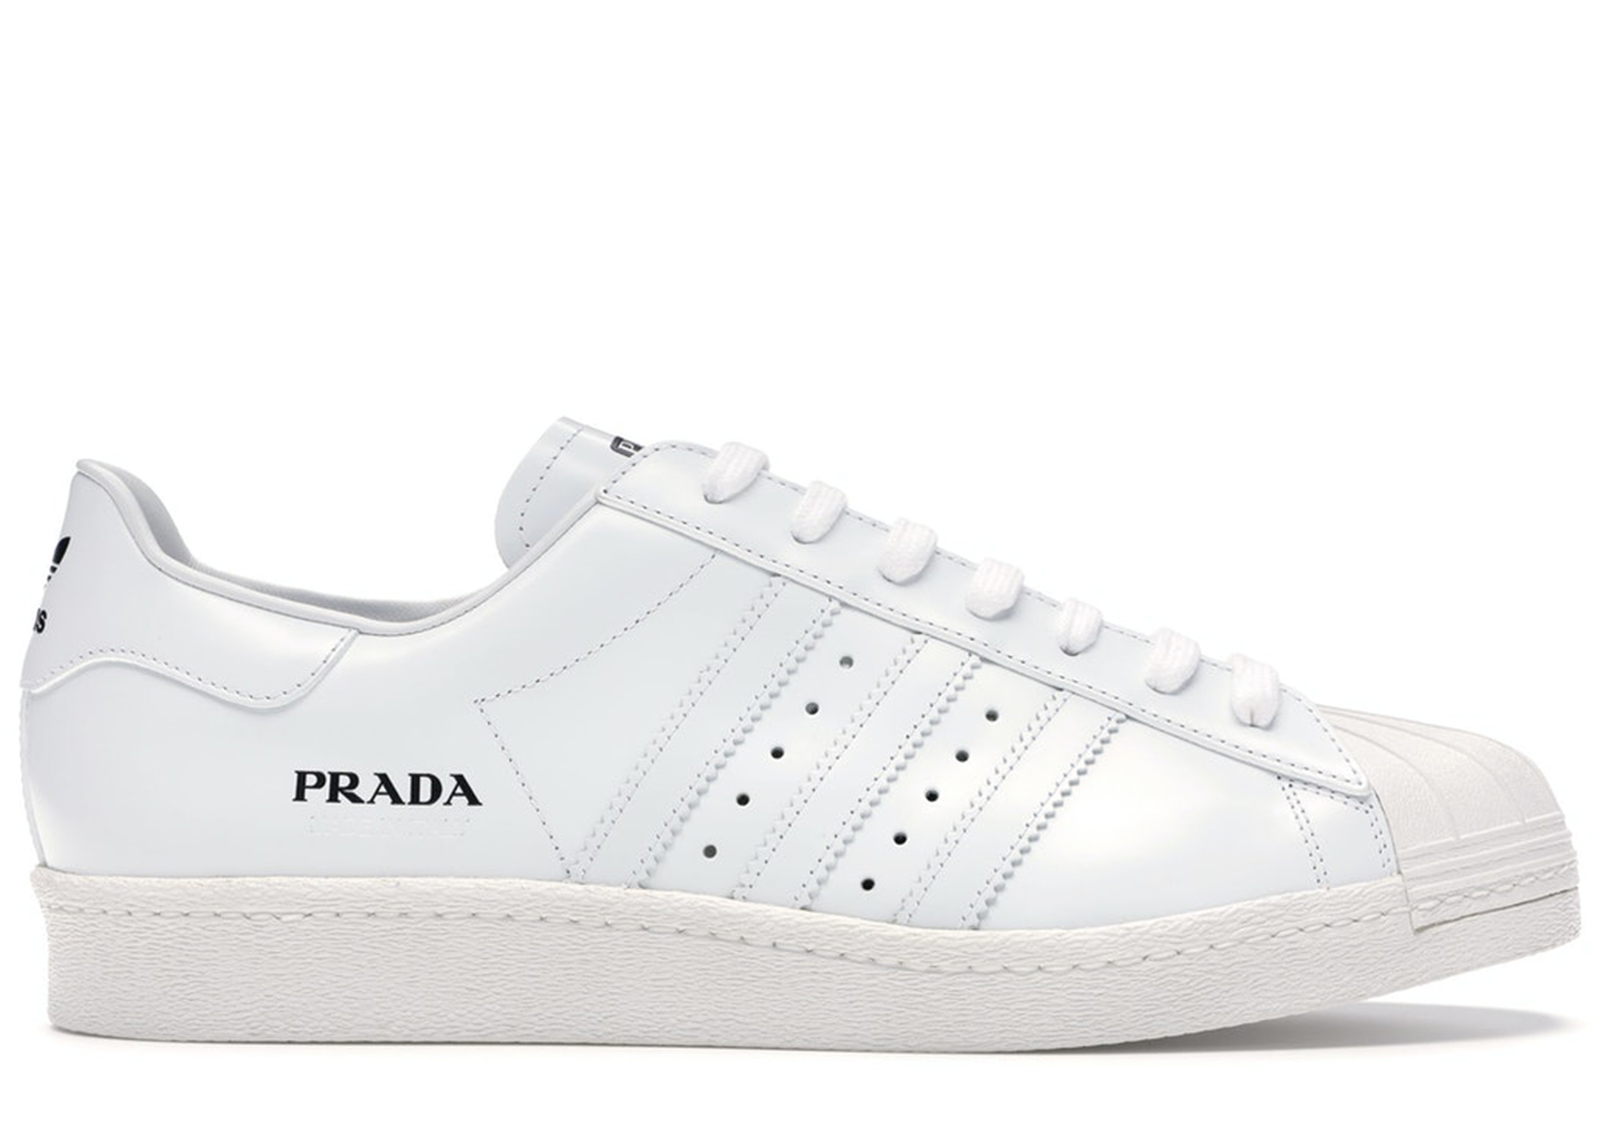 adidas Superstar Prada (Without Bowling Bag)